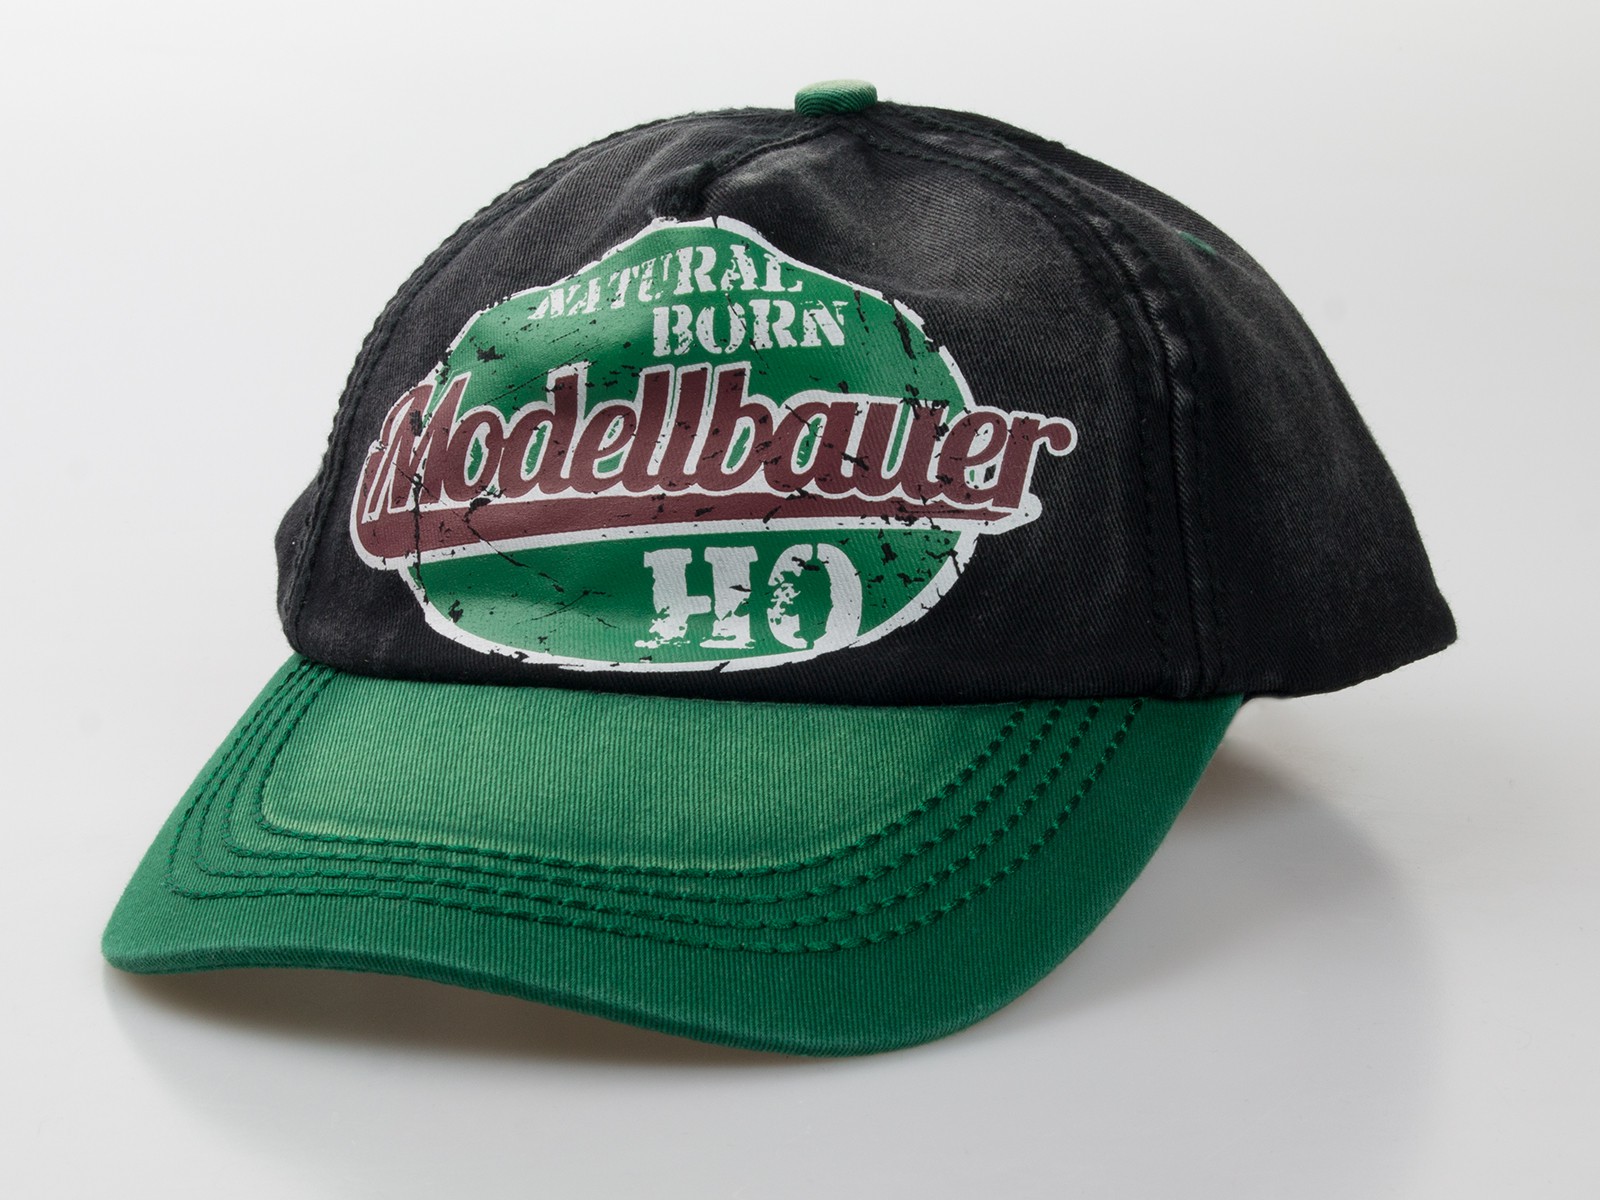 Baseball-Cap "natural born Modellbauer"